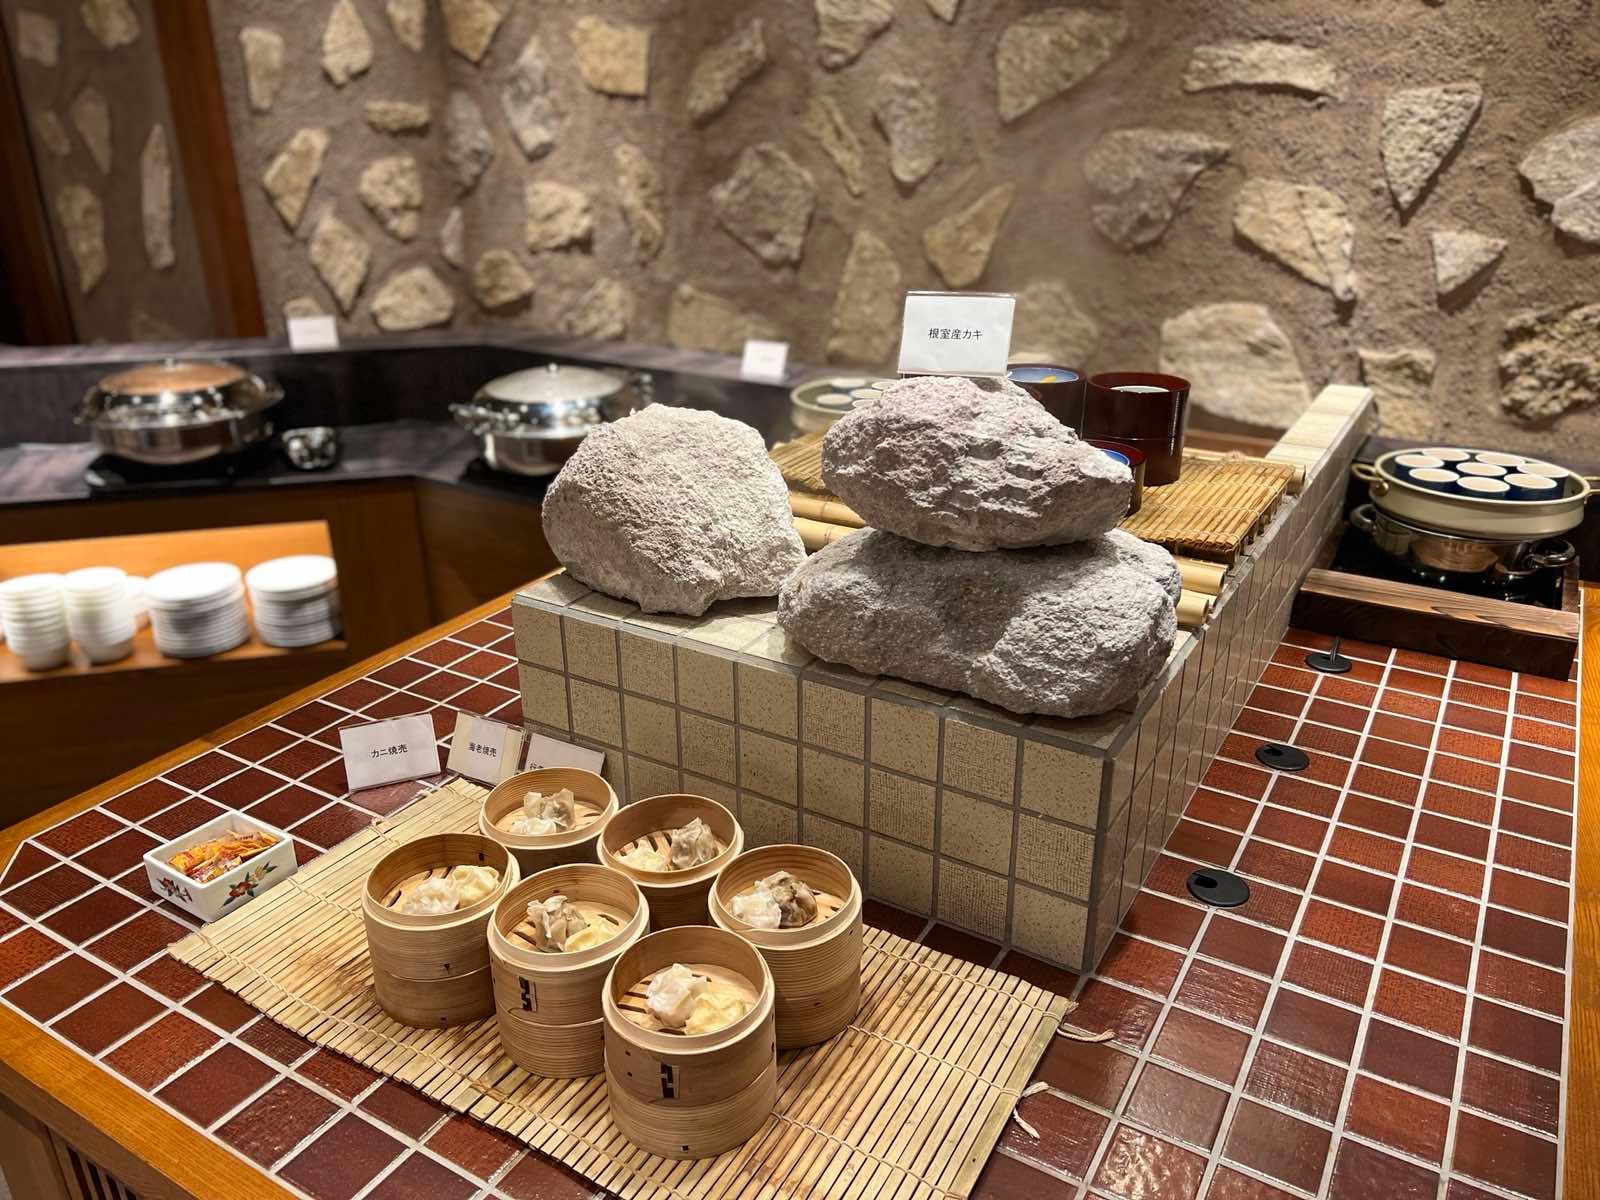 Buffet restaurant "haspo" specialties, Mt. Iou steamed dishes